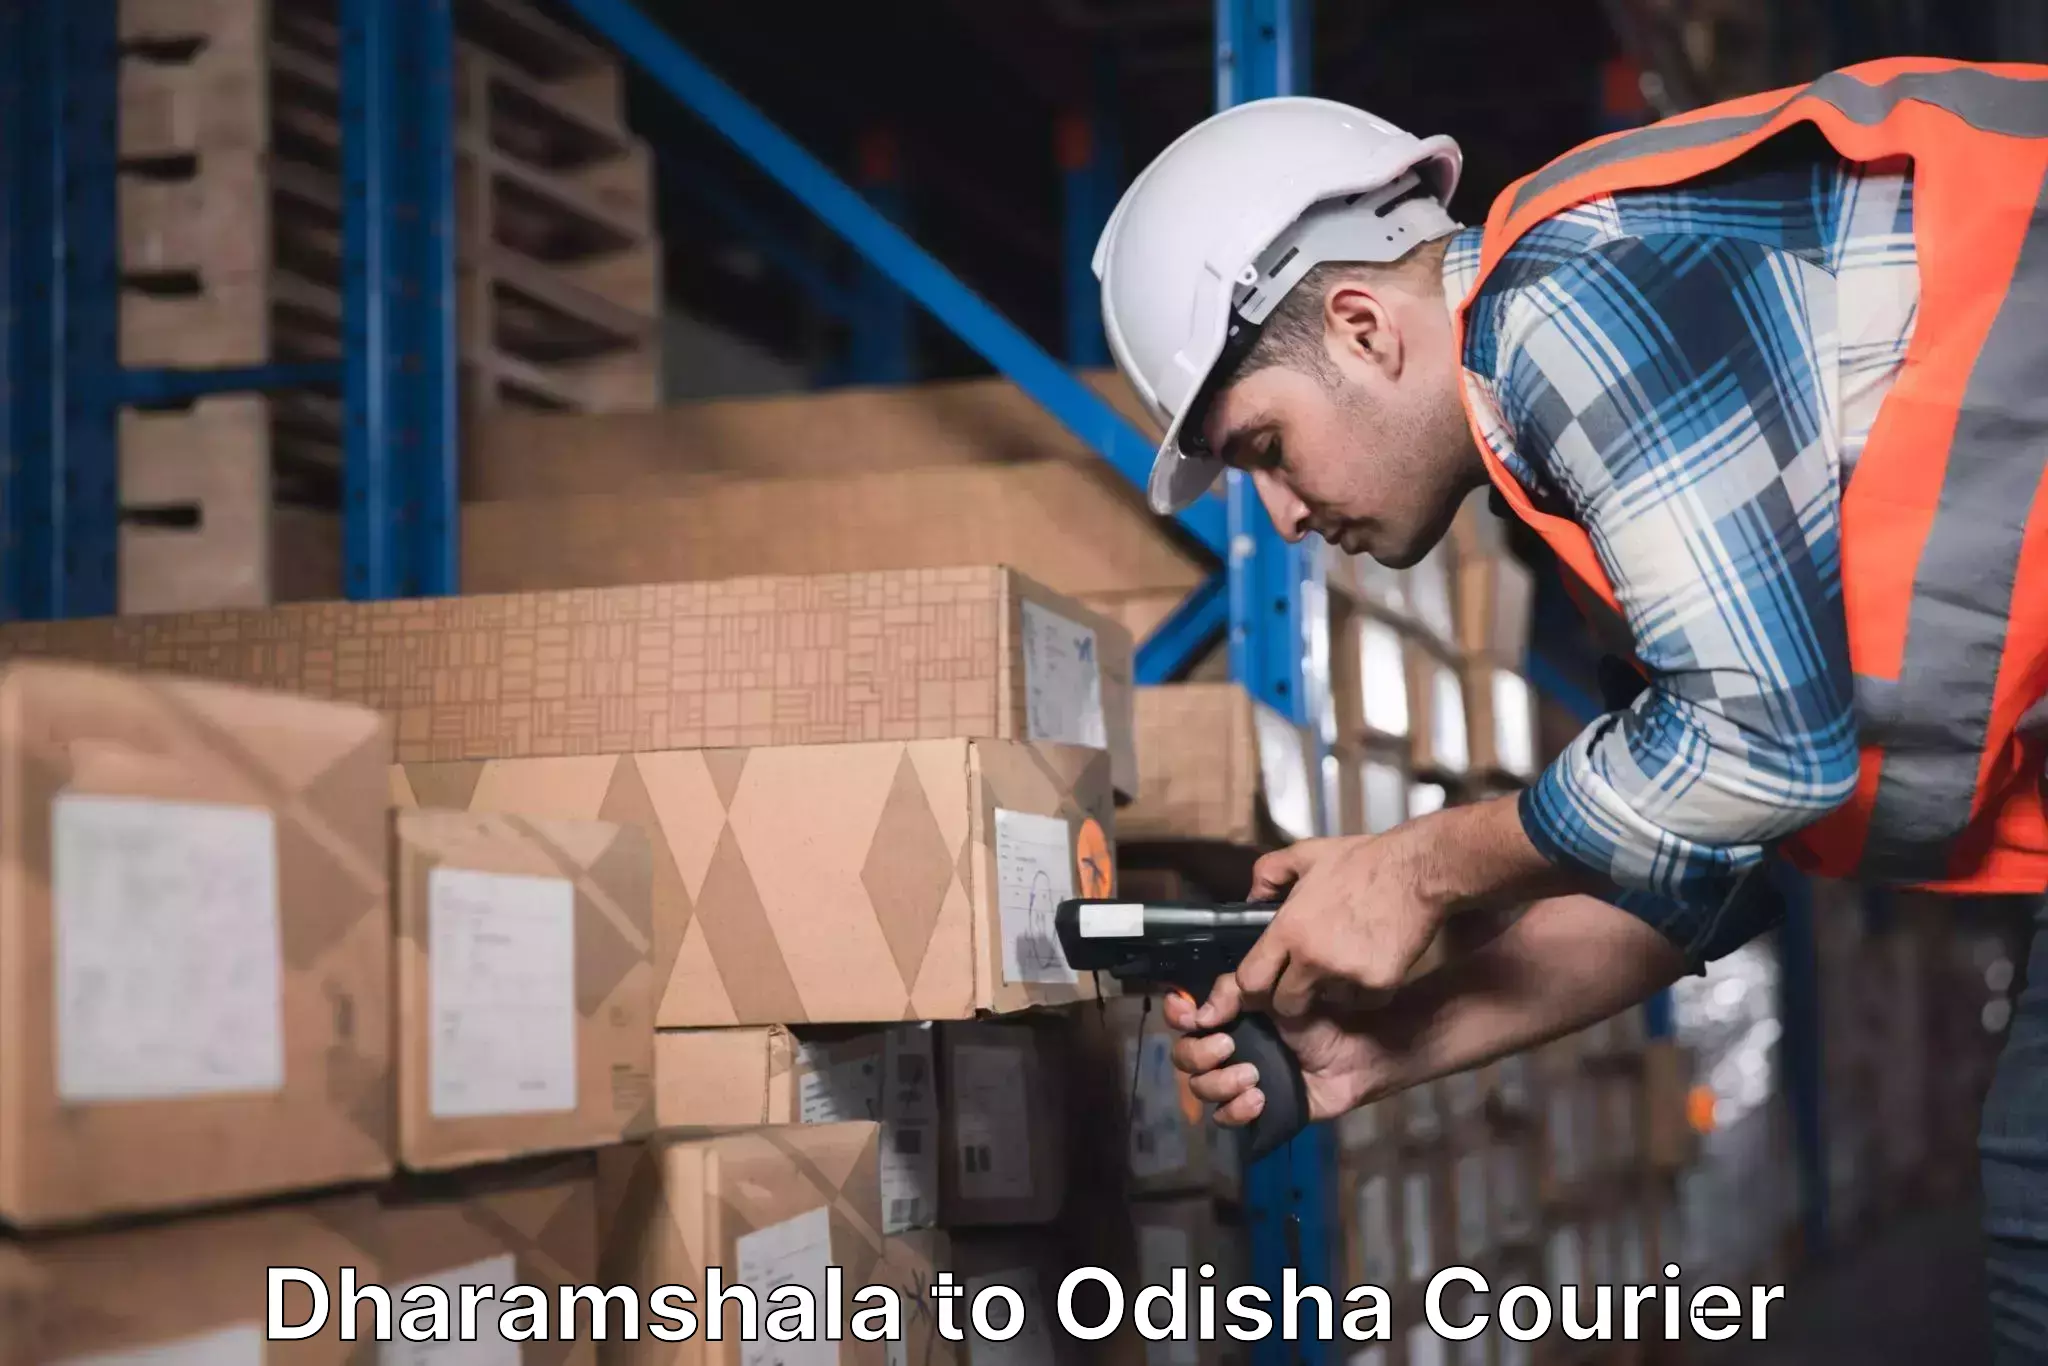 Professional courier handling Dharamshala to Daspalla